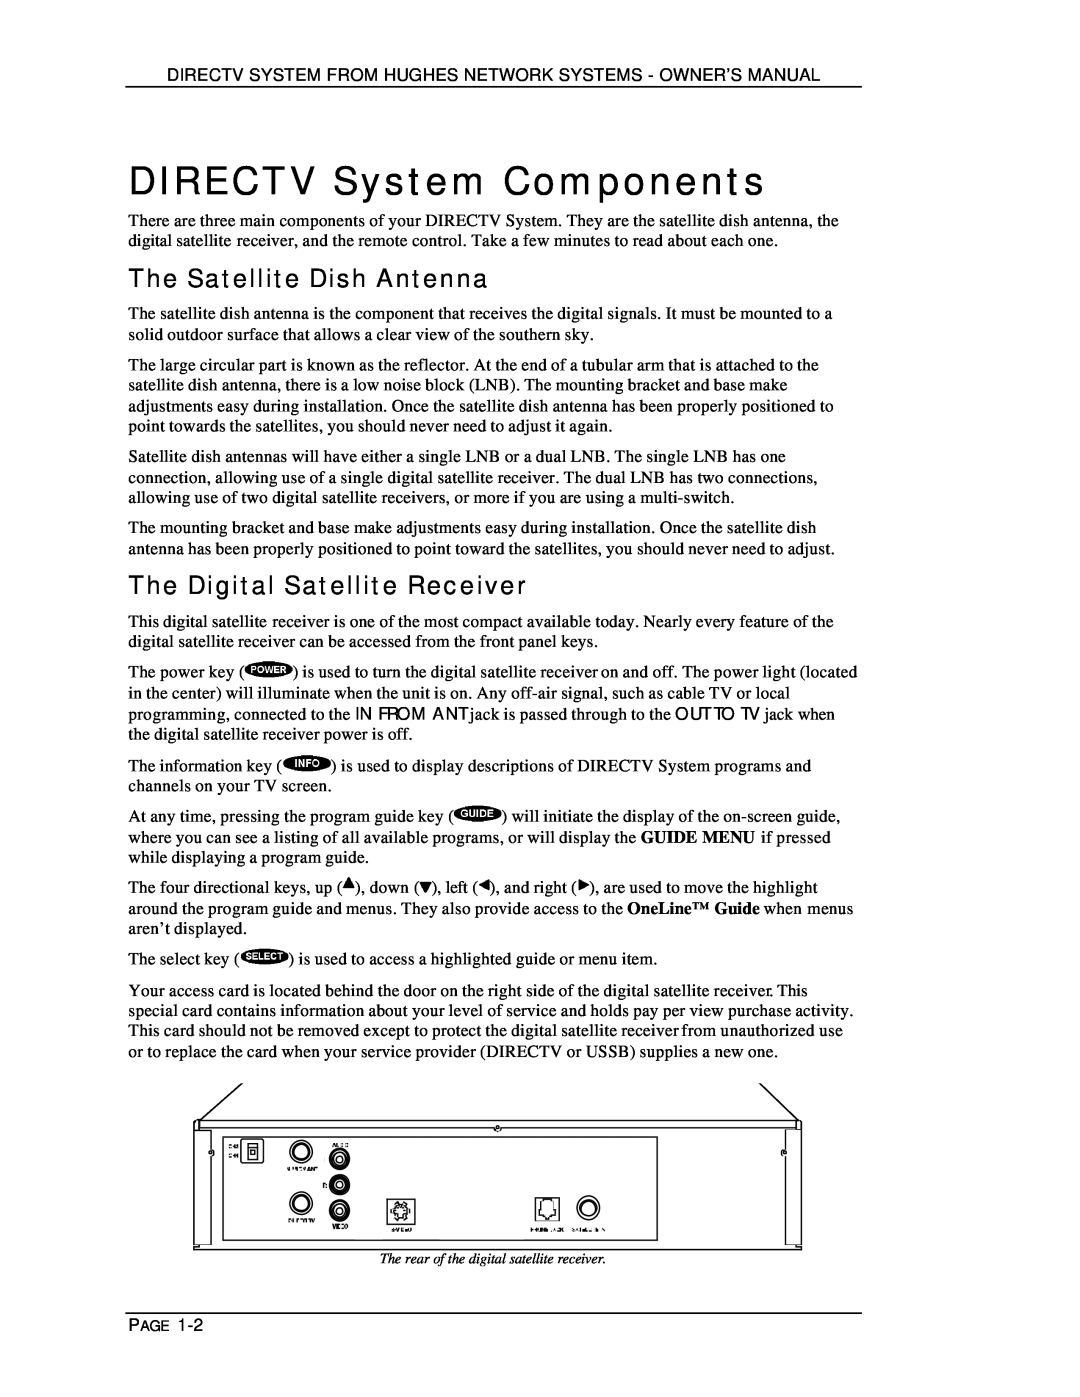 DirecTV HIRD-D01, HIRD-D11 DIRECTV System Components, The Satellite Dish Antenna, The Digital Satellite Receiver 